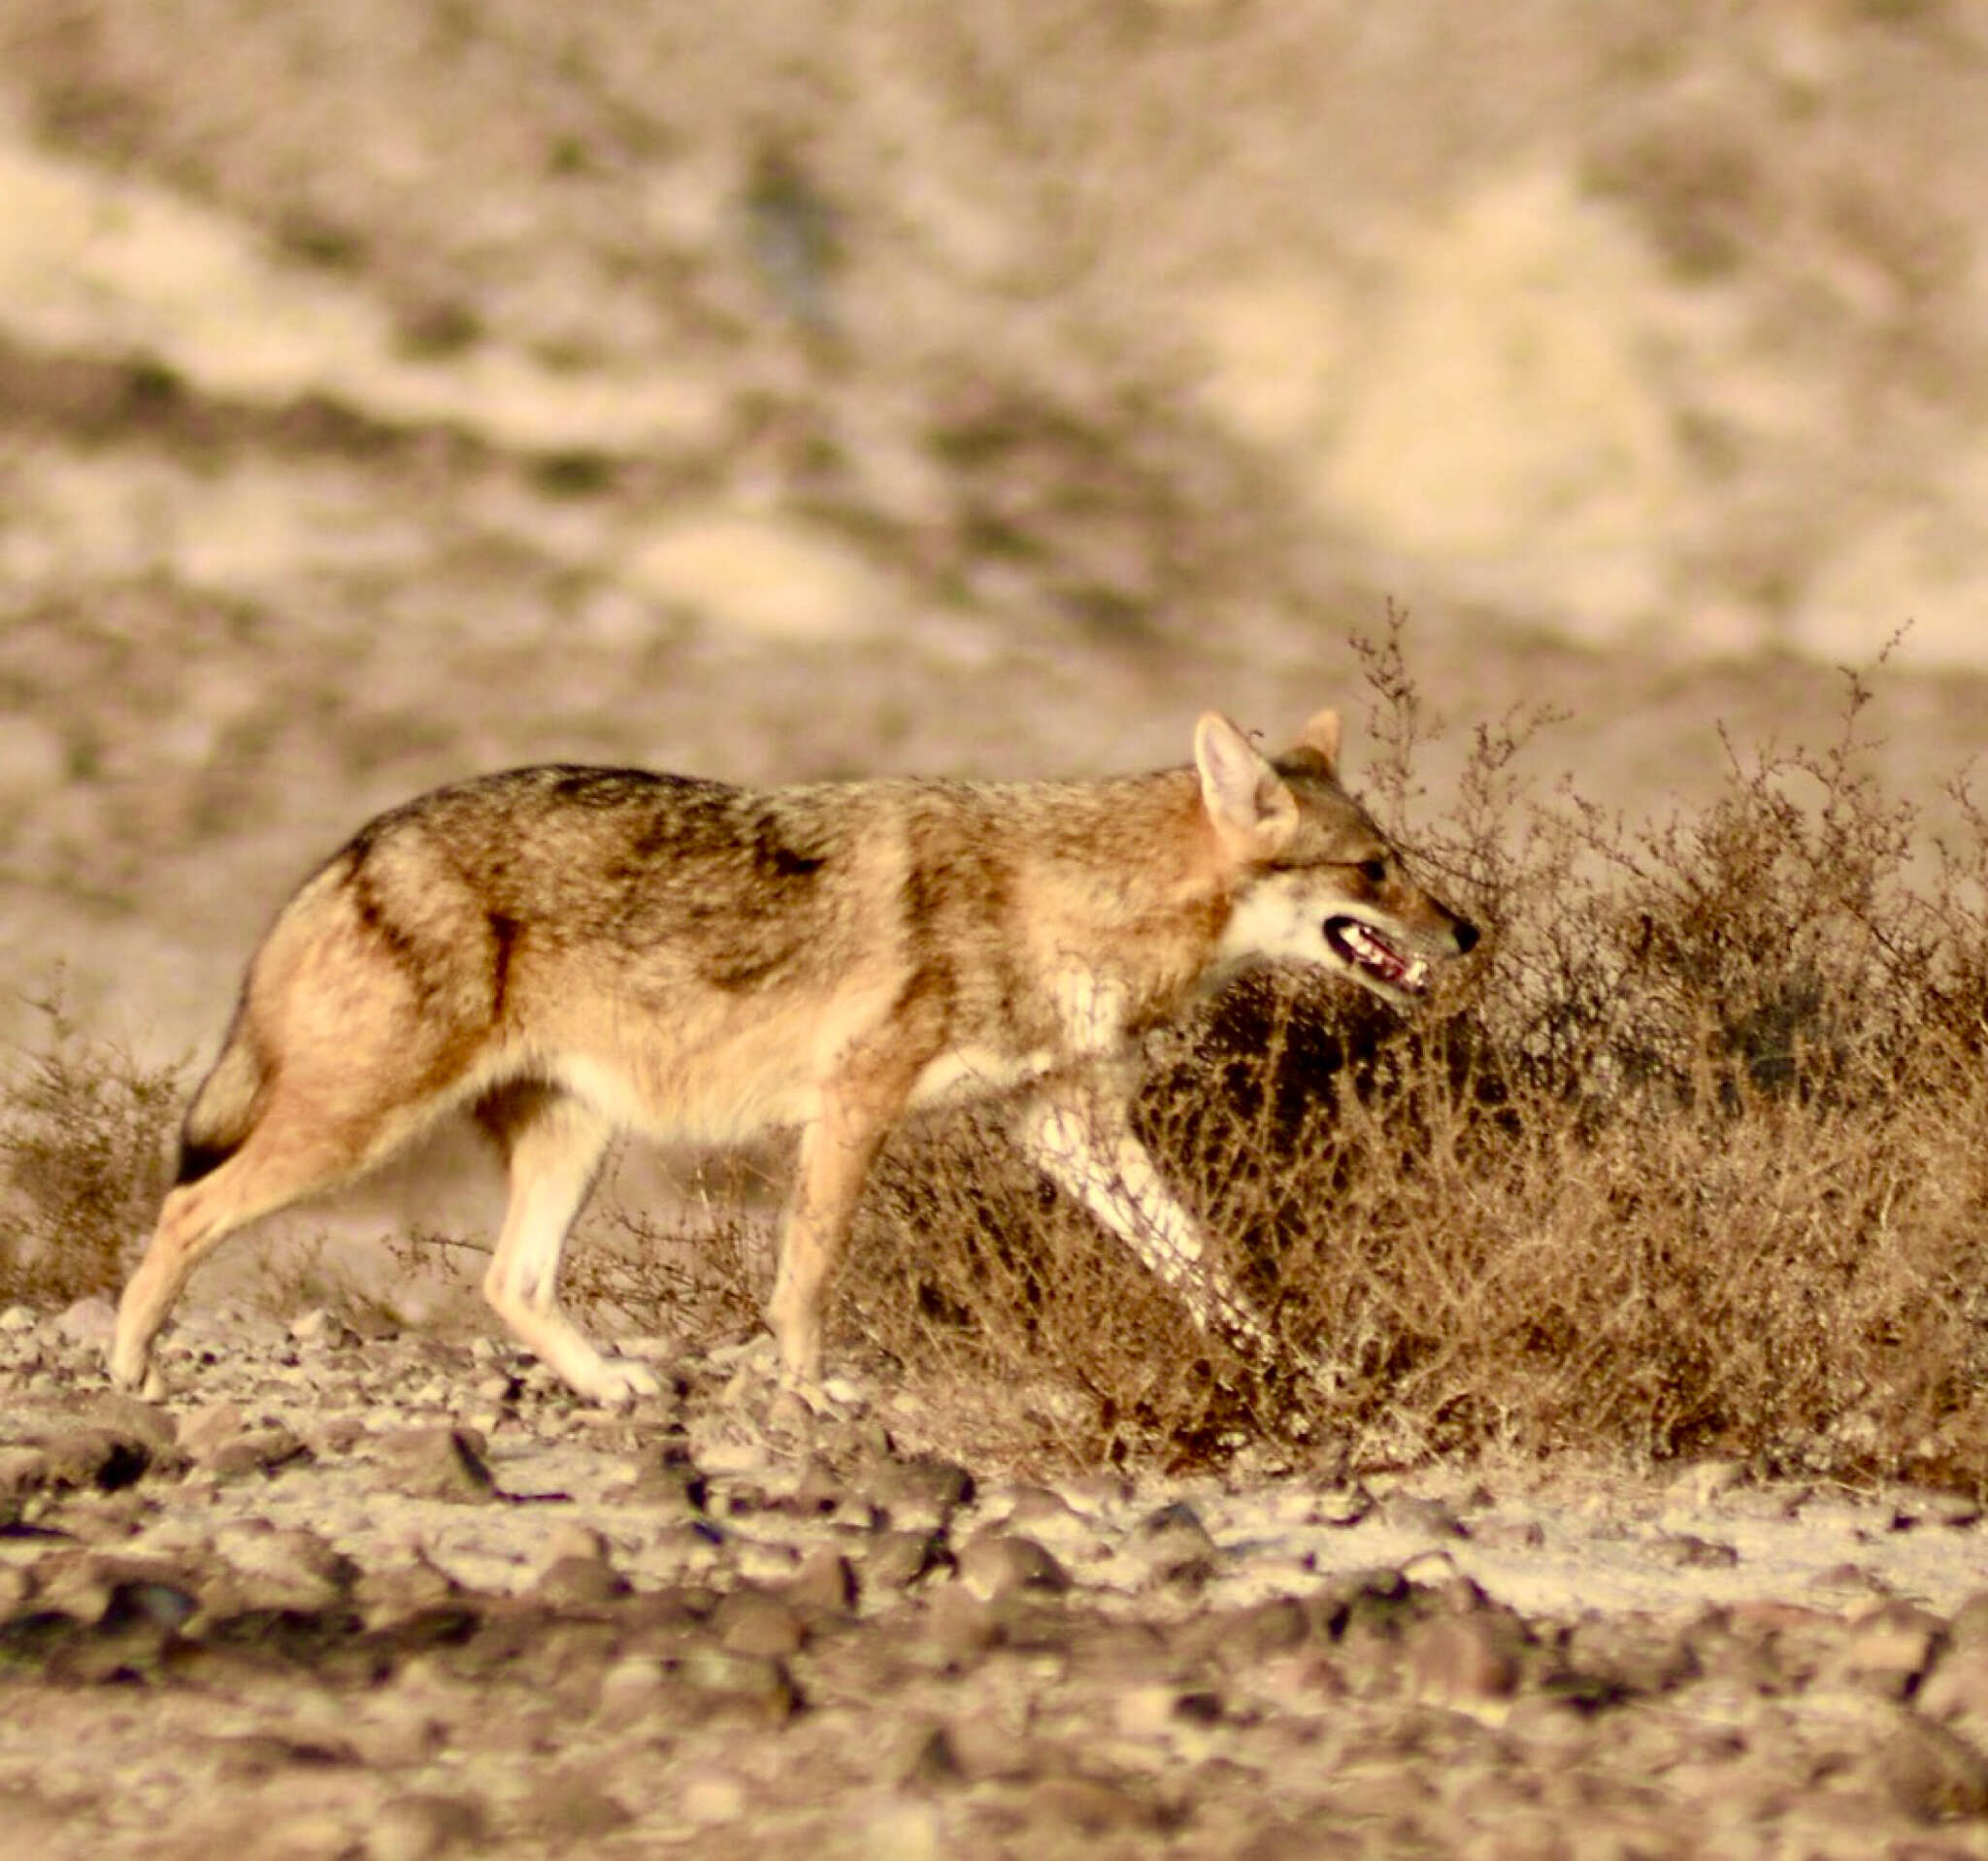 Image of Common jackal